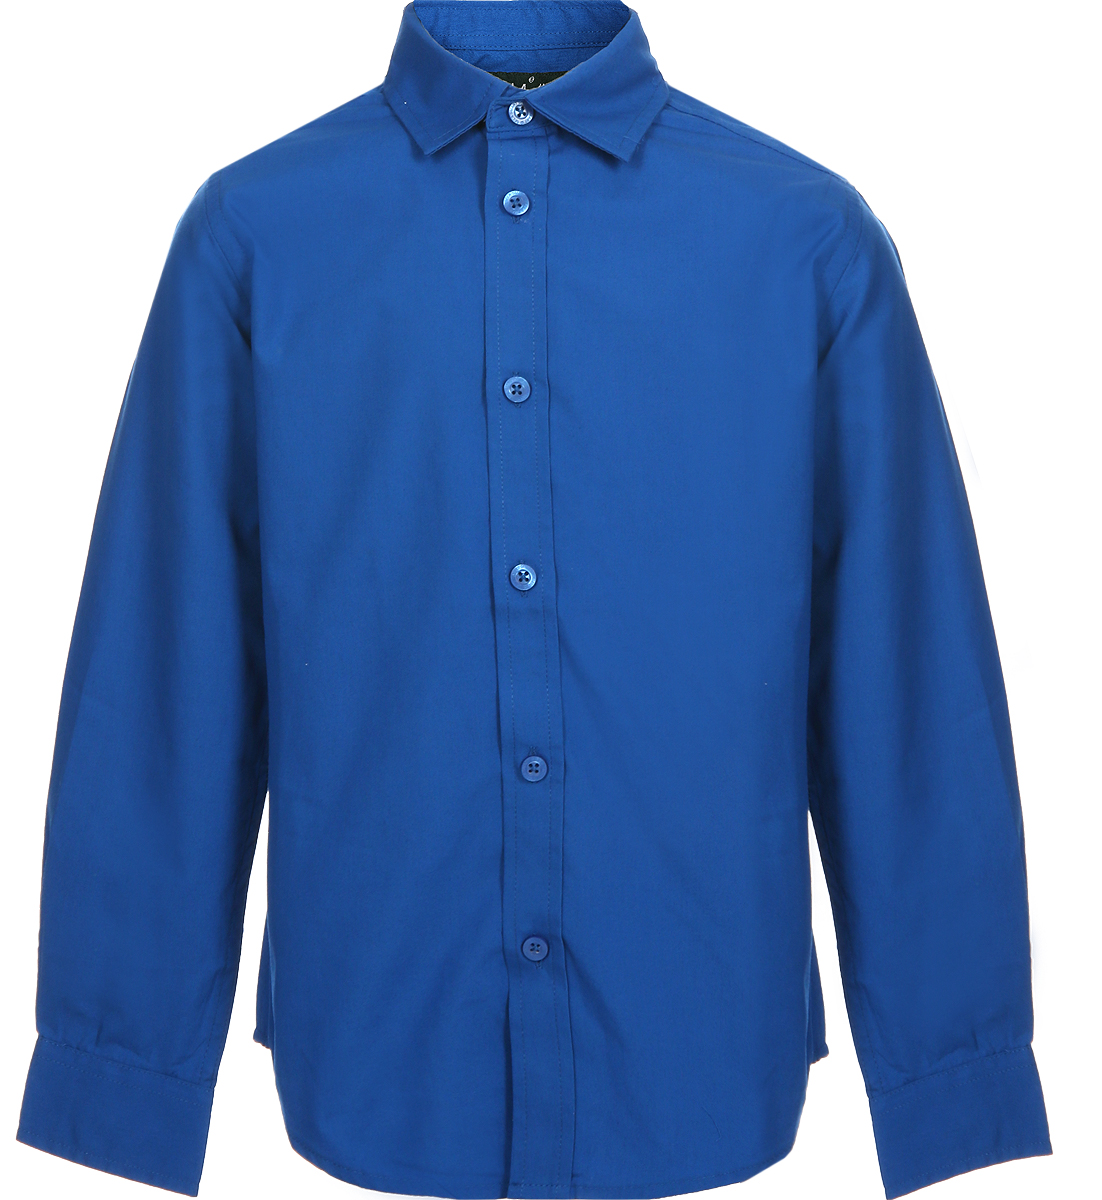 Рубашка для мальчика Sela, цвет: темно-синий. H-812/235-8310. Размер 122